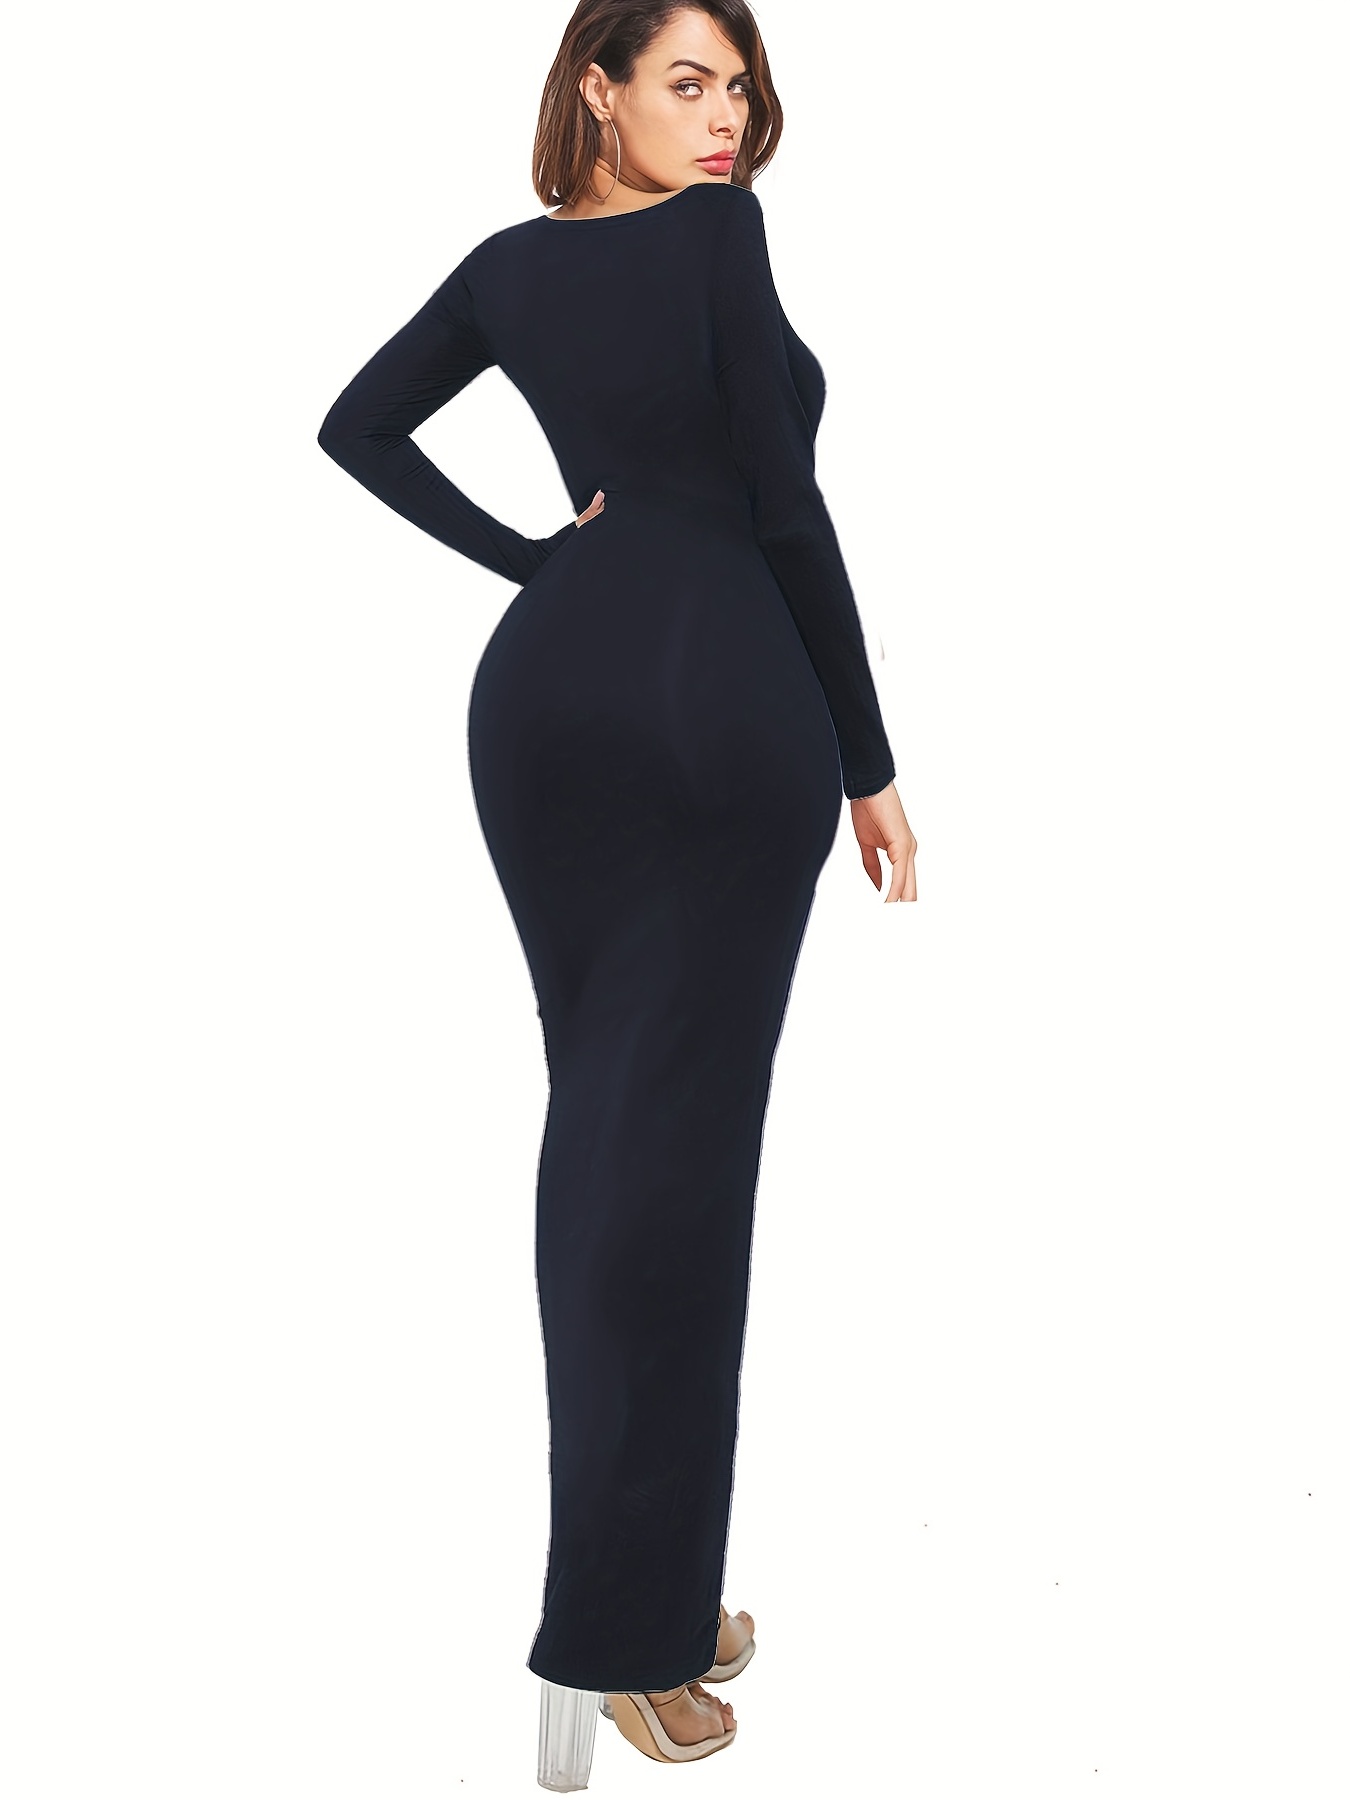 Black Bodycon Maxi Dress Sleeves  Black Bodycon Dress Long Sleeve